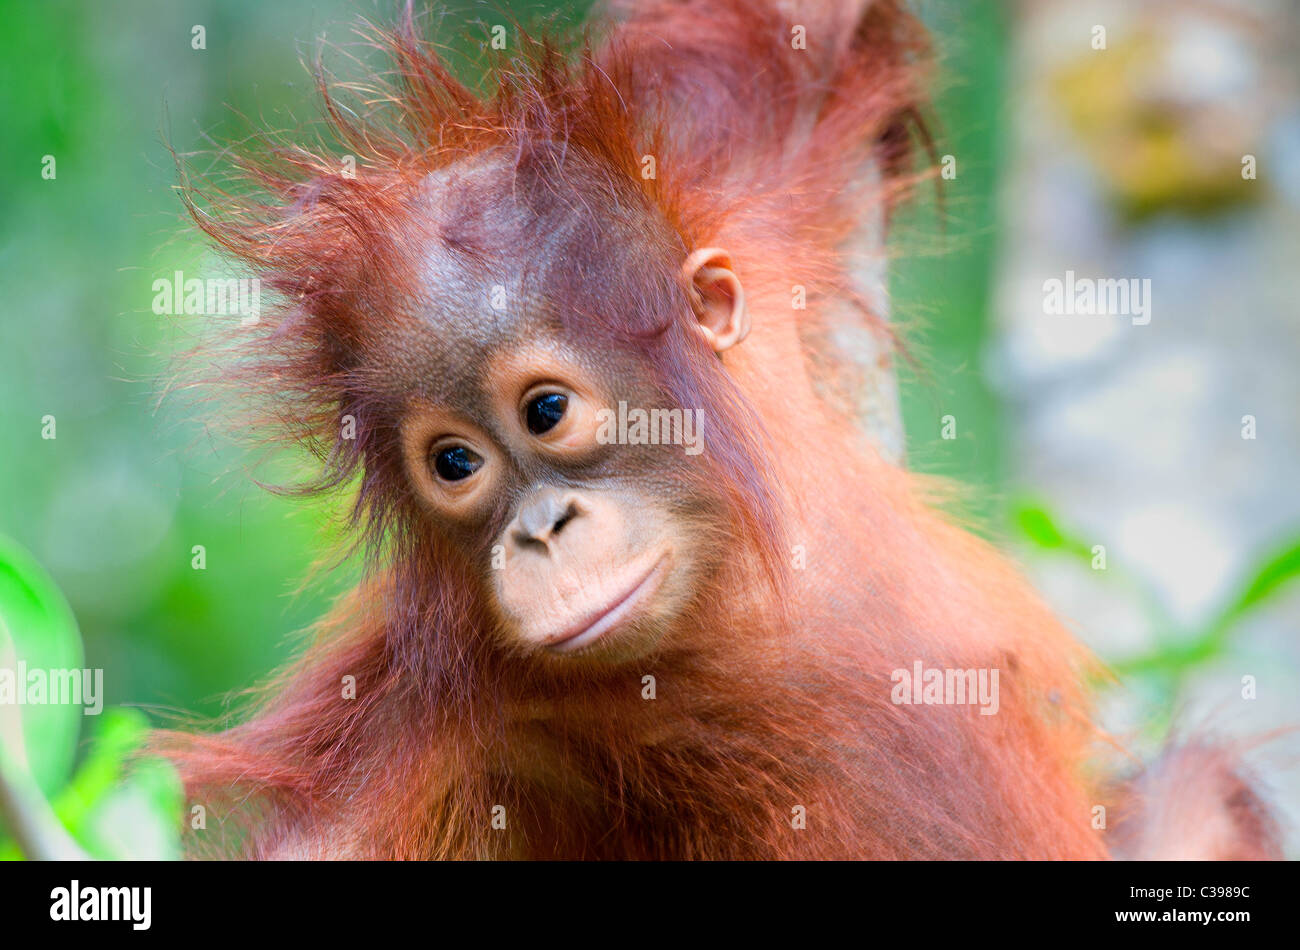 Baby Orangutan in tree Stock Photo